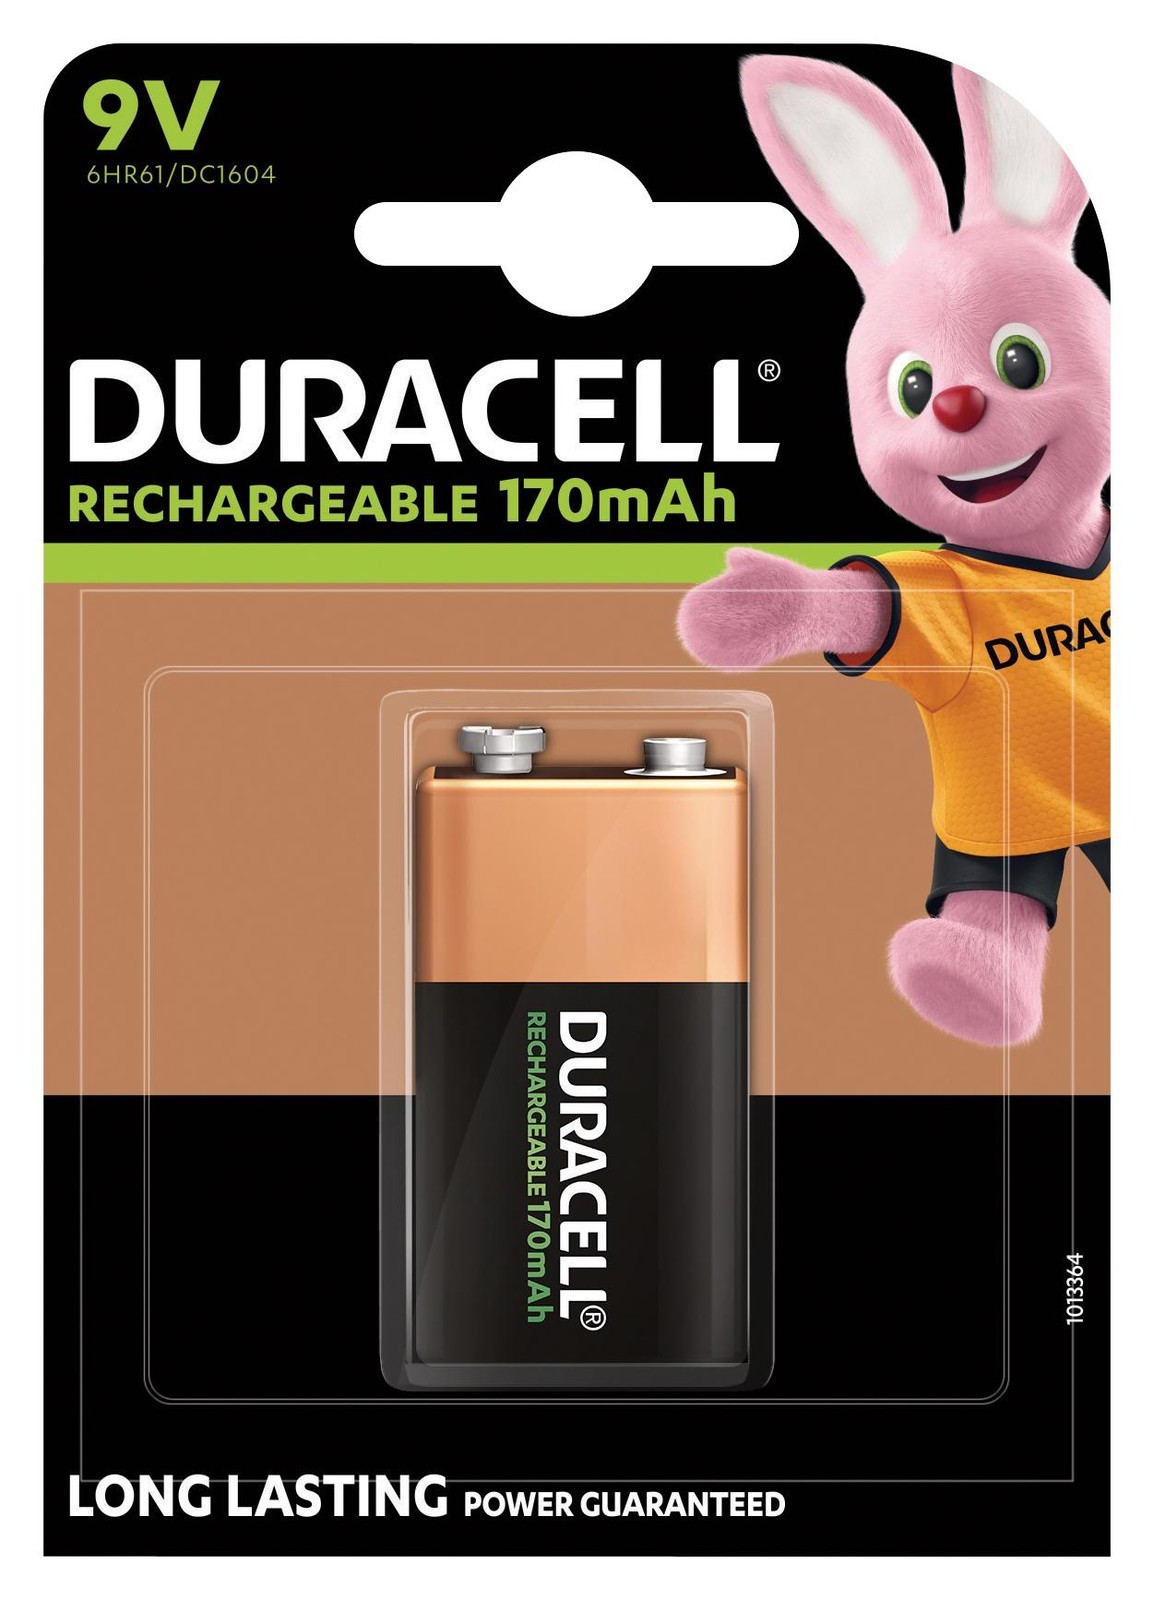 Duracell Dc1604 P1 Du Battery, Rechargeable, 8.4V, 170Mah, 9V